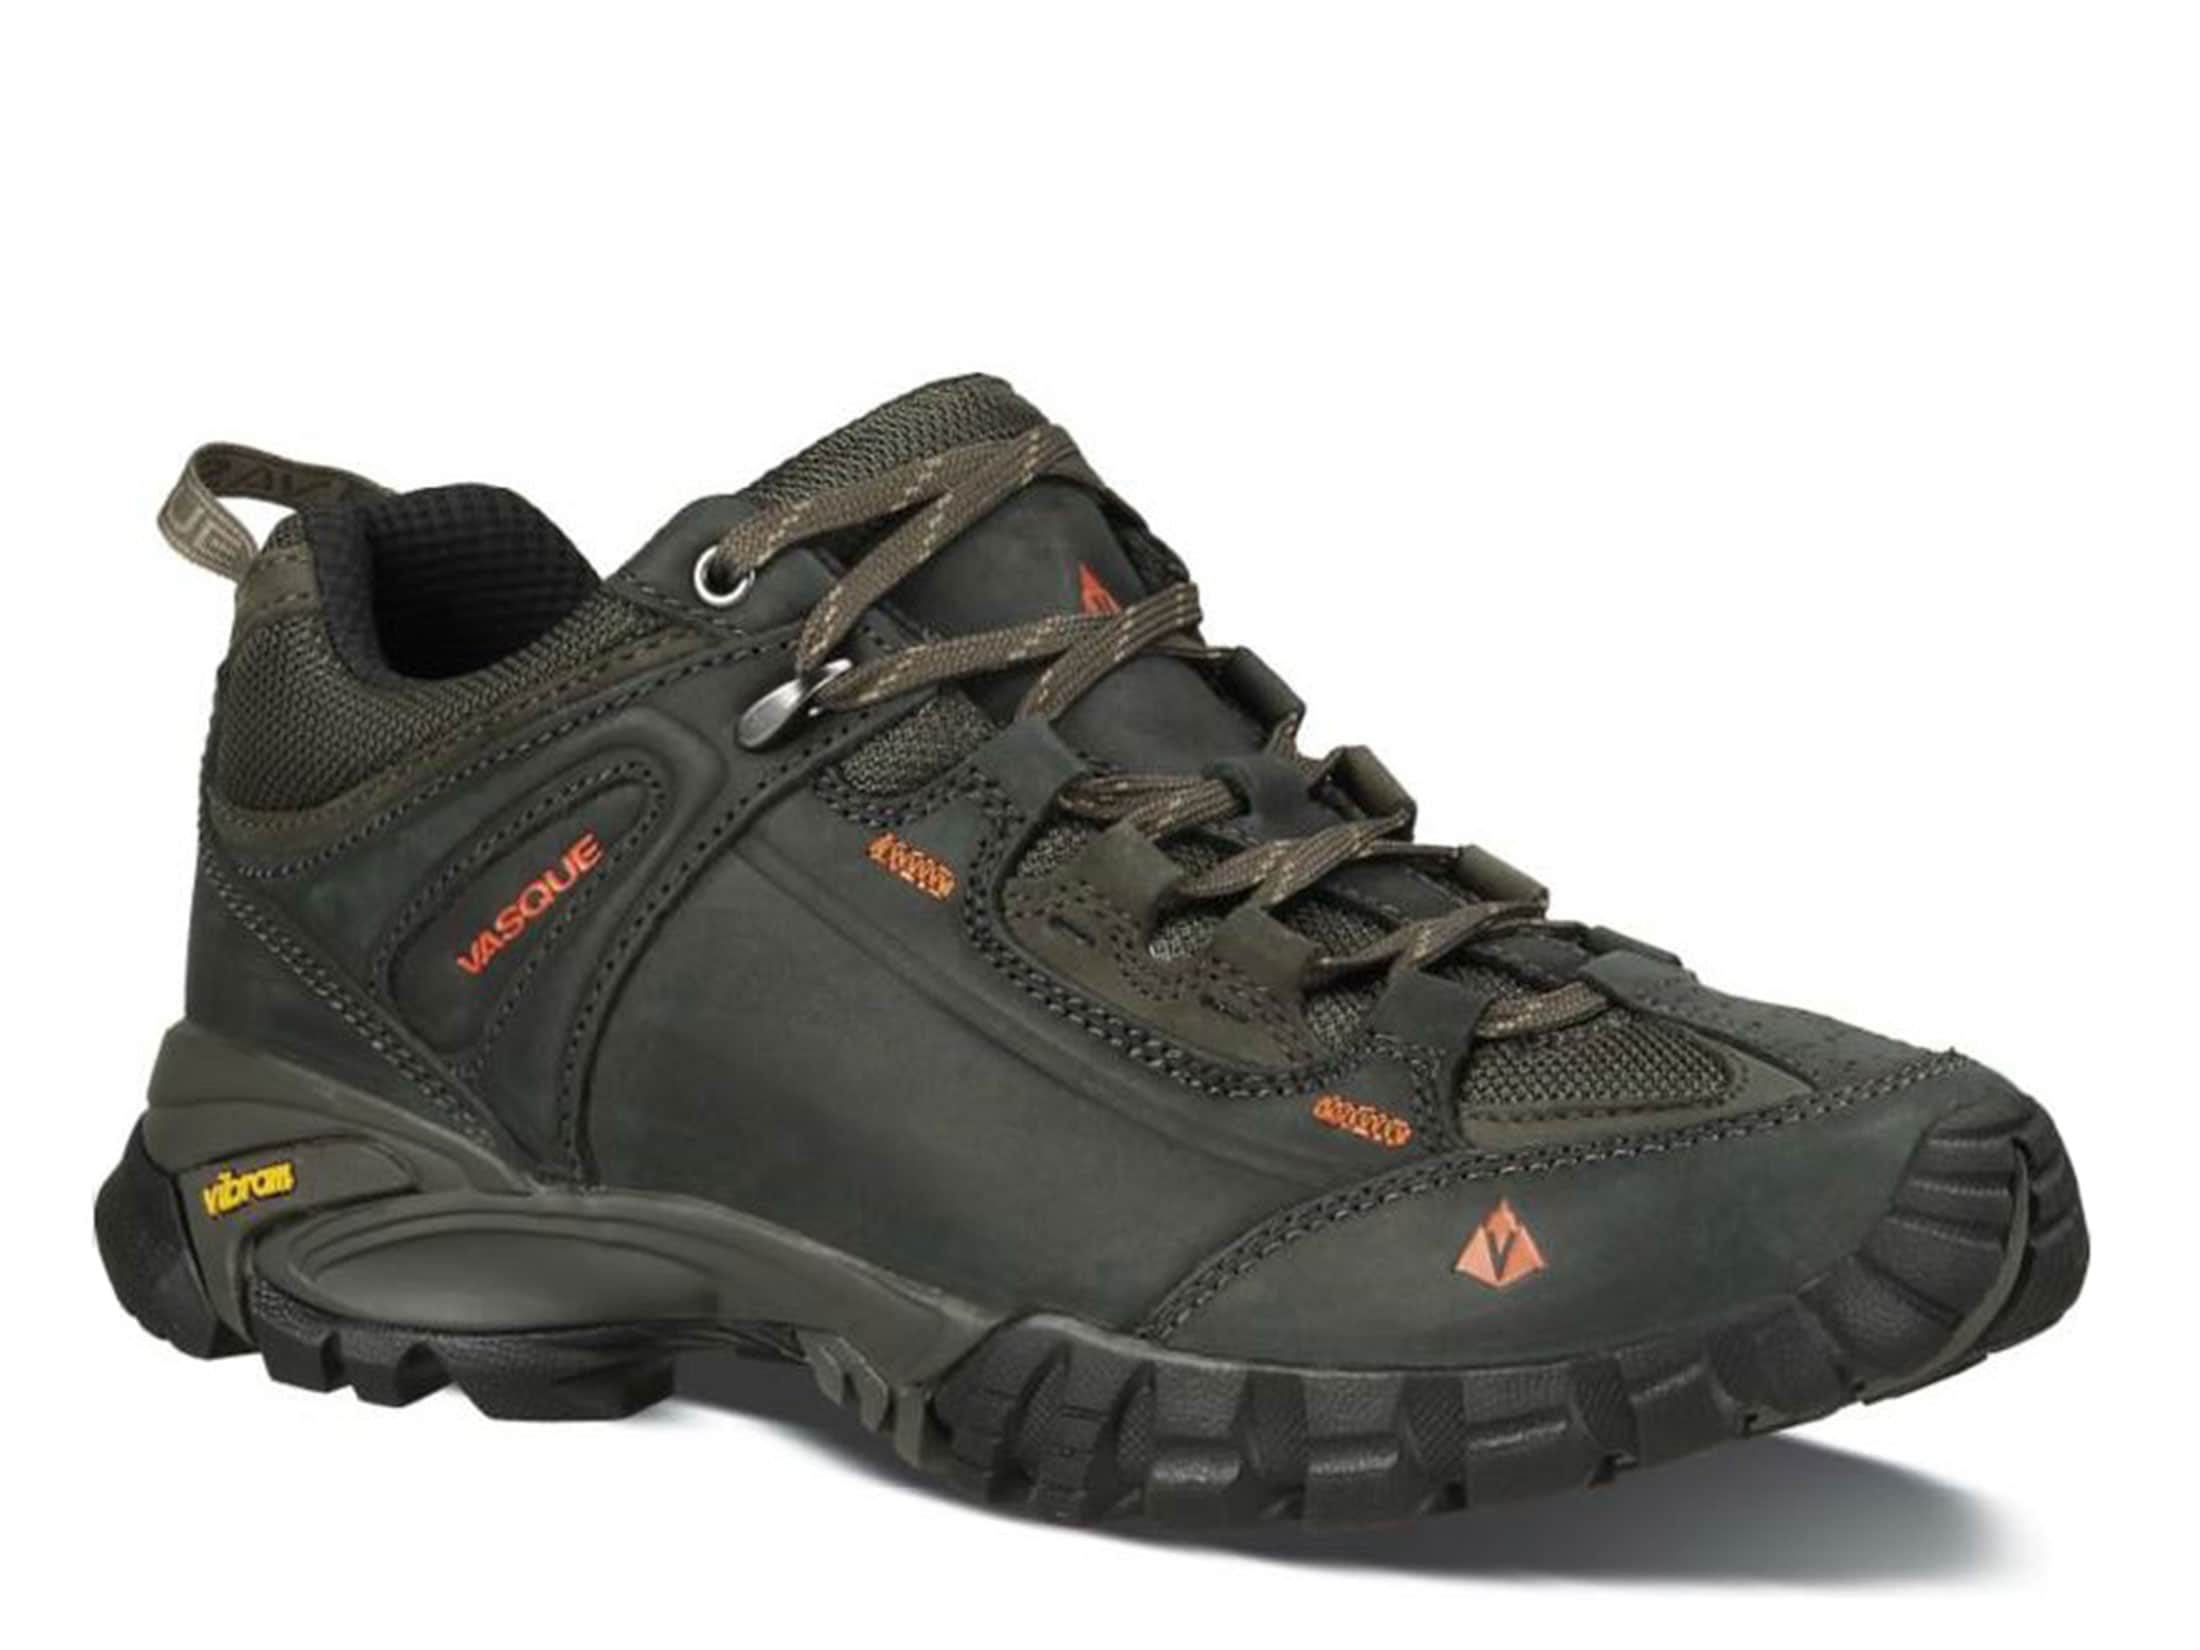 Vasque Mantra 2.0 4 Hiking Shoes Leather Beluga Rooibos Tea Men's 10.5